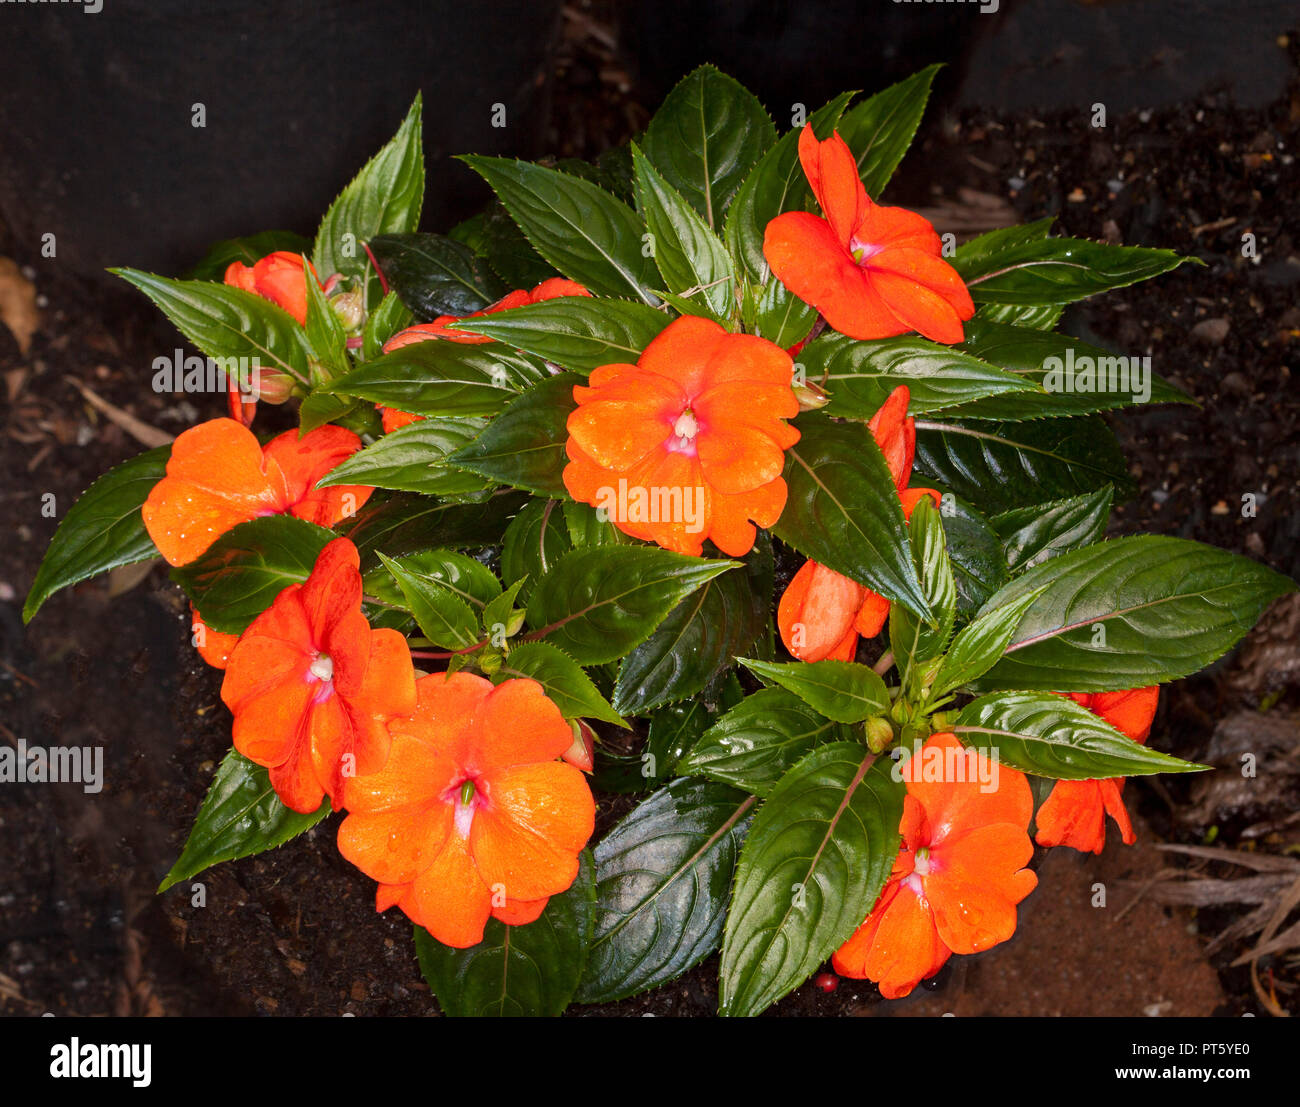 Stunning vivid orange flowers among dark green glossy leaves of Impatiens hawkerii New Guinea hybrid Stock Photo